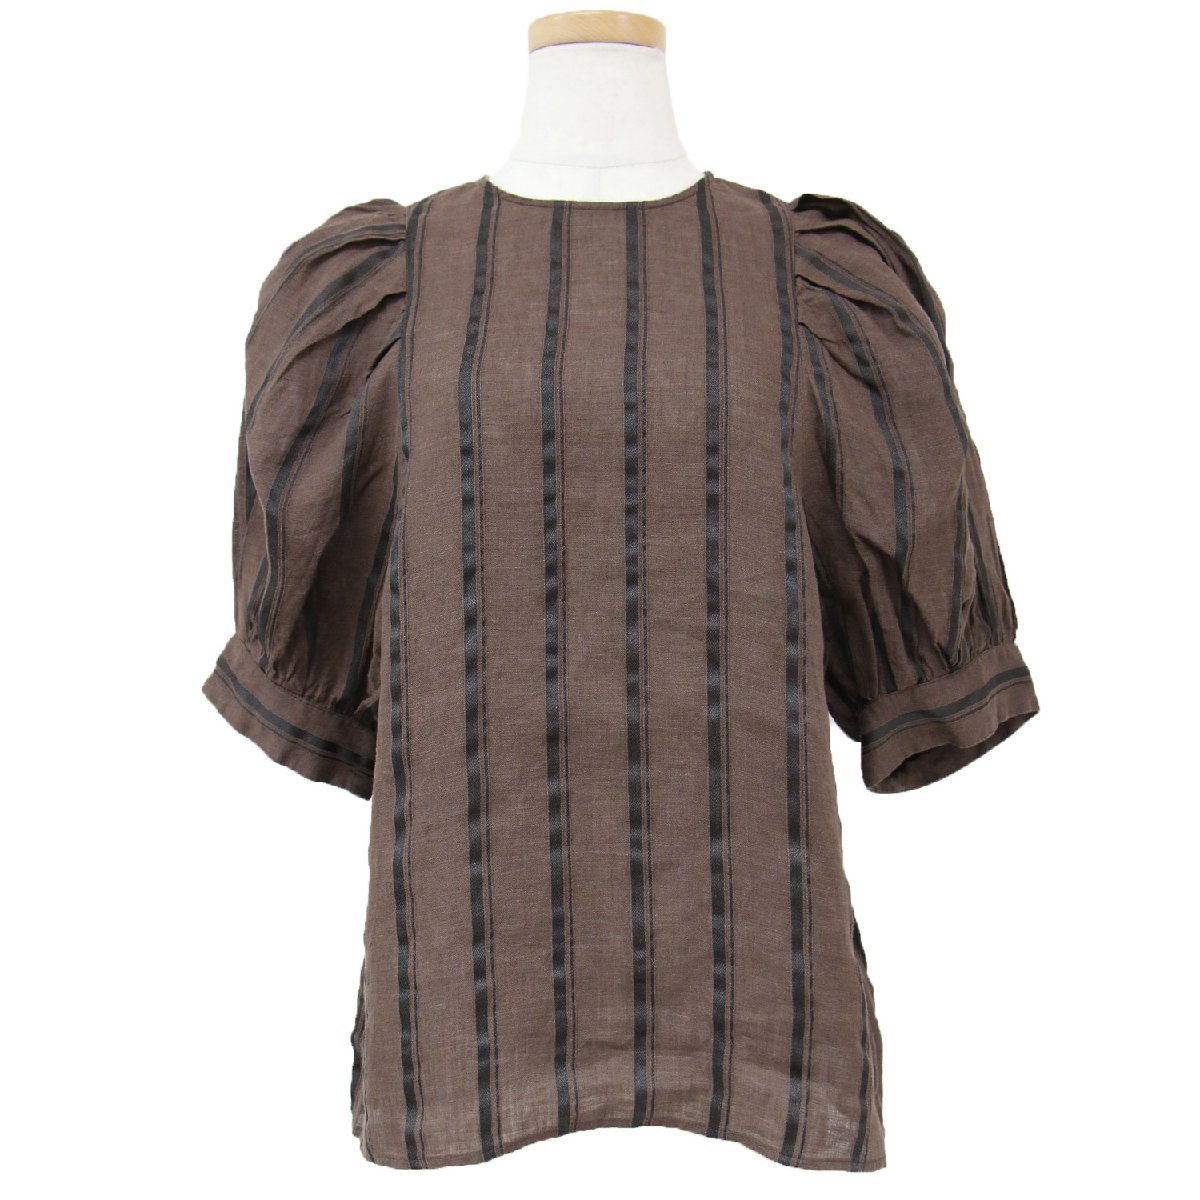  beautiful goods JOURNAL STANDARD Journal Standard blouse tops cut and sewn 23 spring summer Brown FREE 5 minute sleeve stripe linen